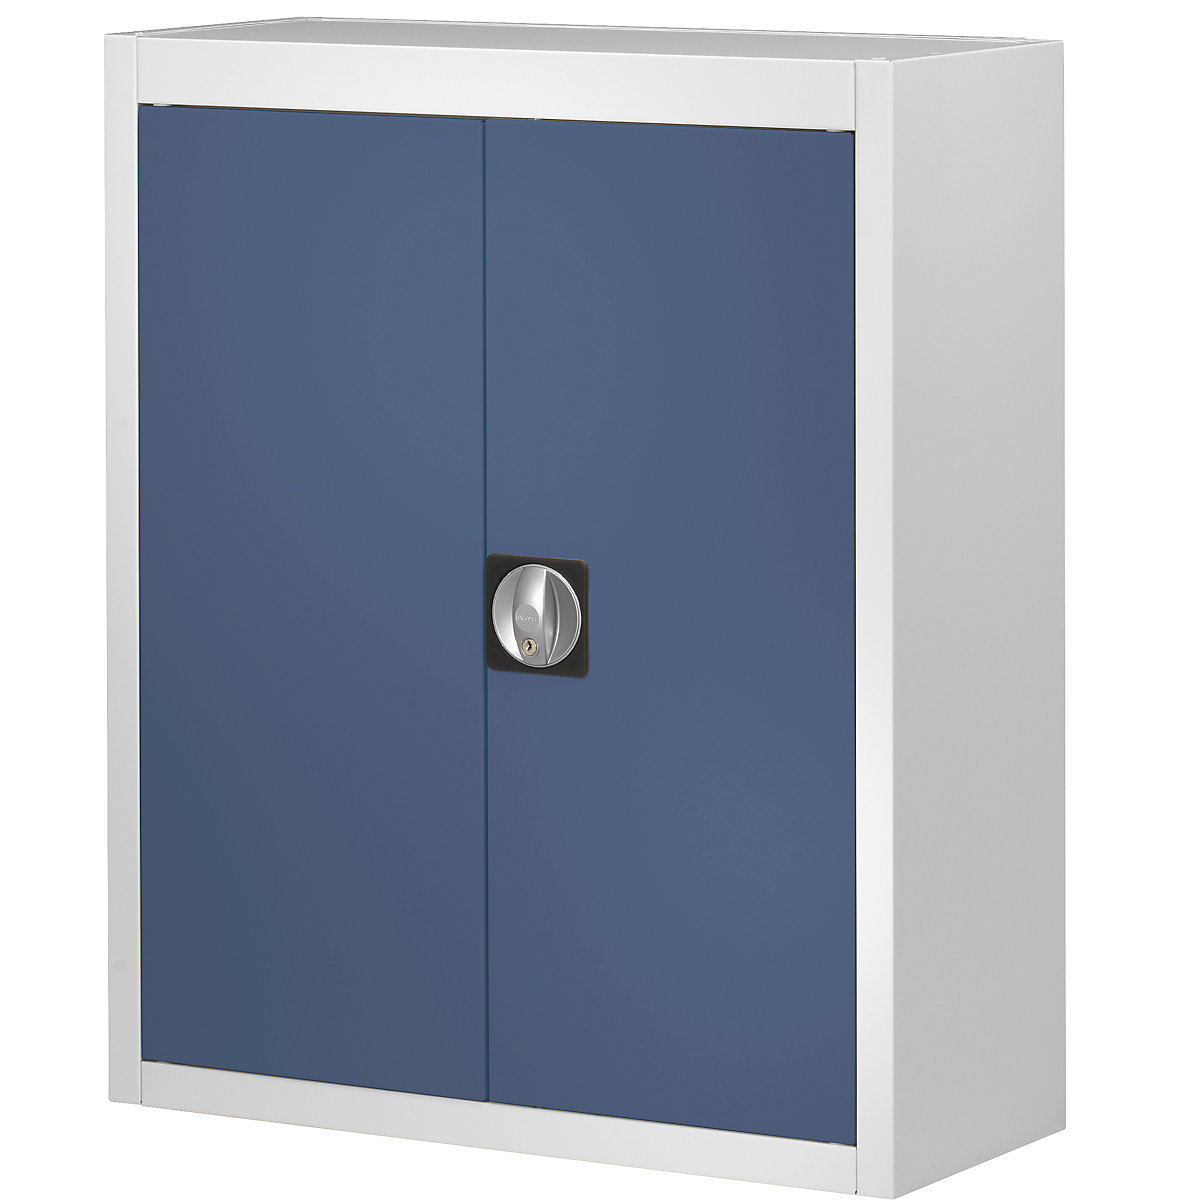 Armario-almacén, sin cajas visualizables – mauser, H x A x P 820 x 680 x 280 mm, bicolor, cuerpo gris, puertas en azul, a partir de 3 unid.-6